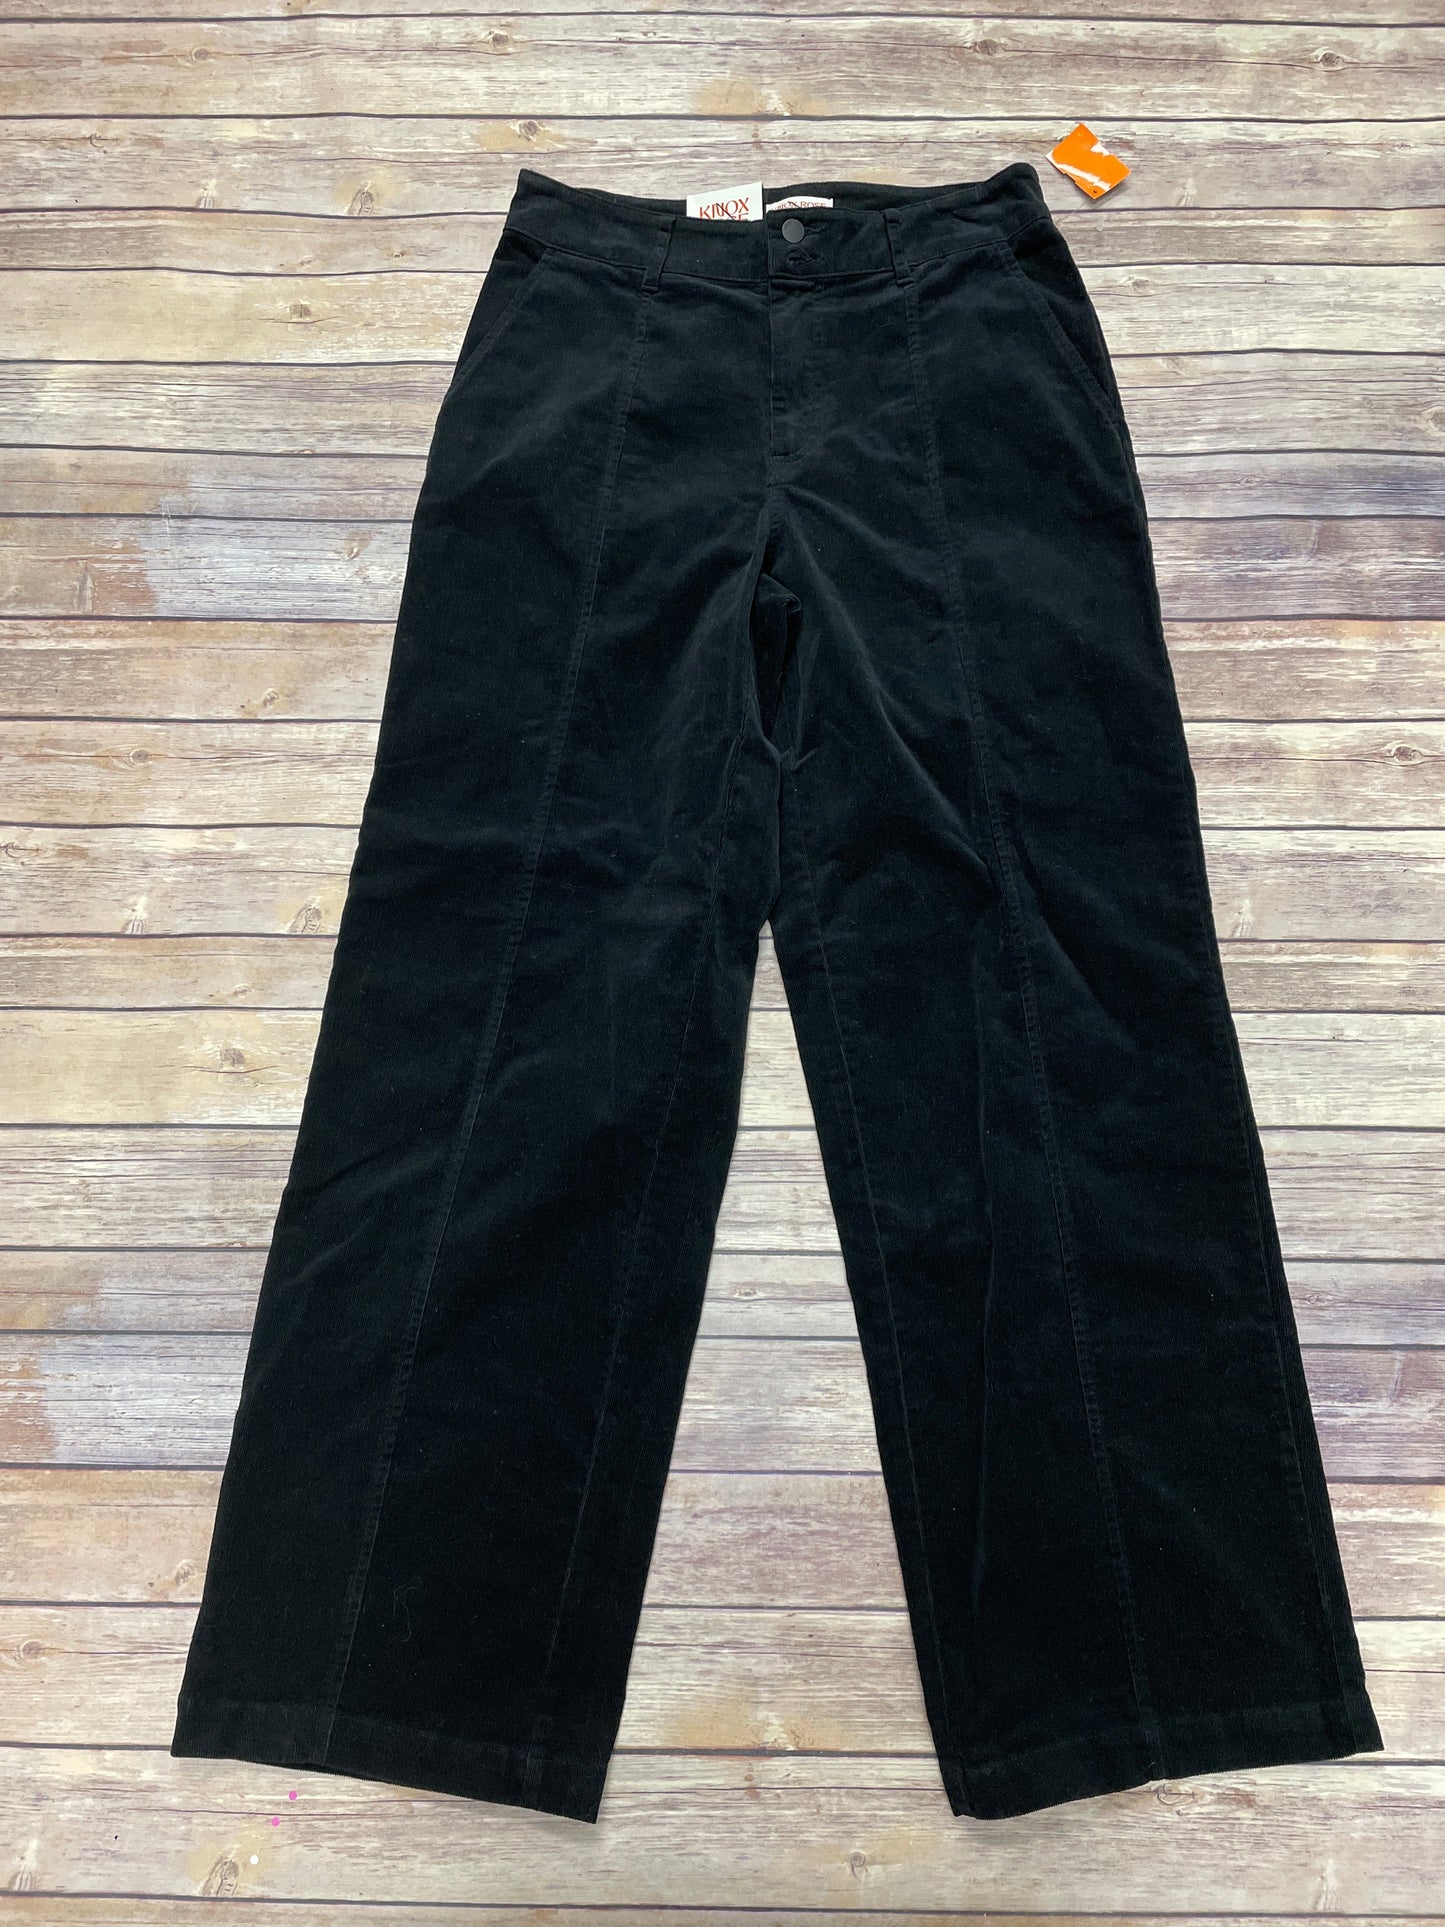 Pants Corduroy By Knox Rose  Size: 10